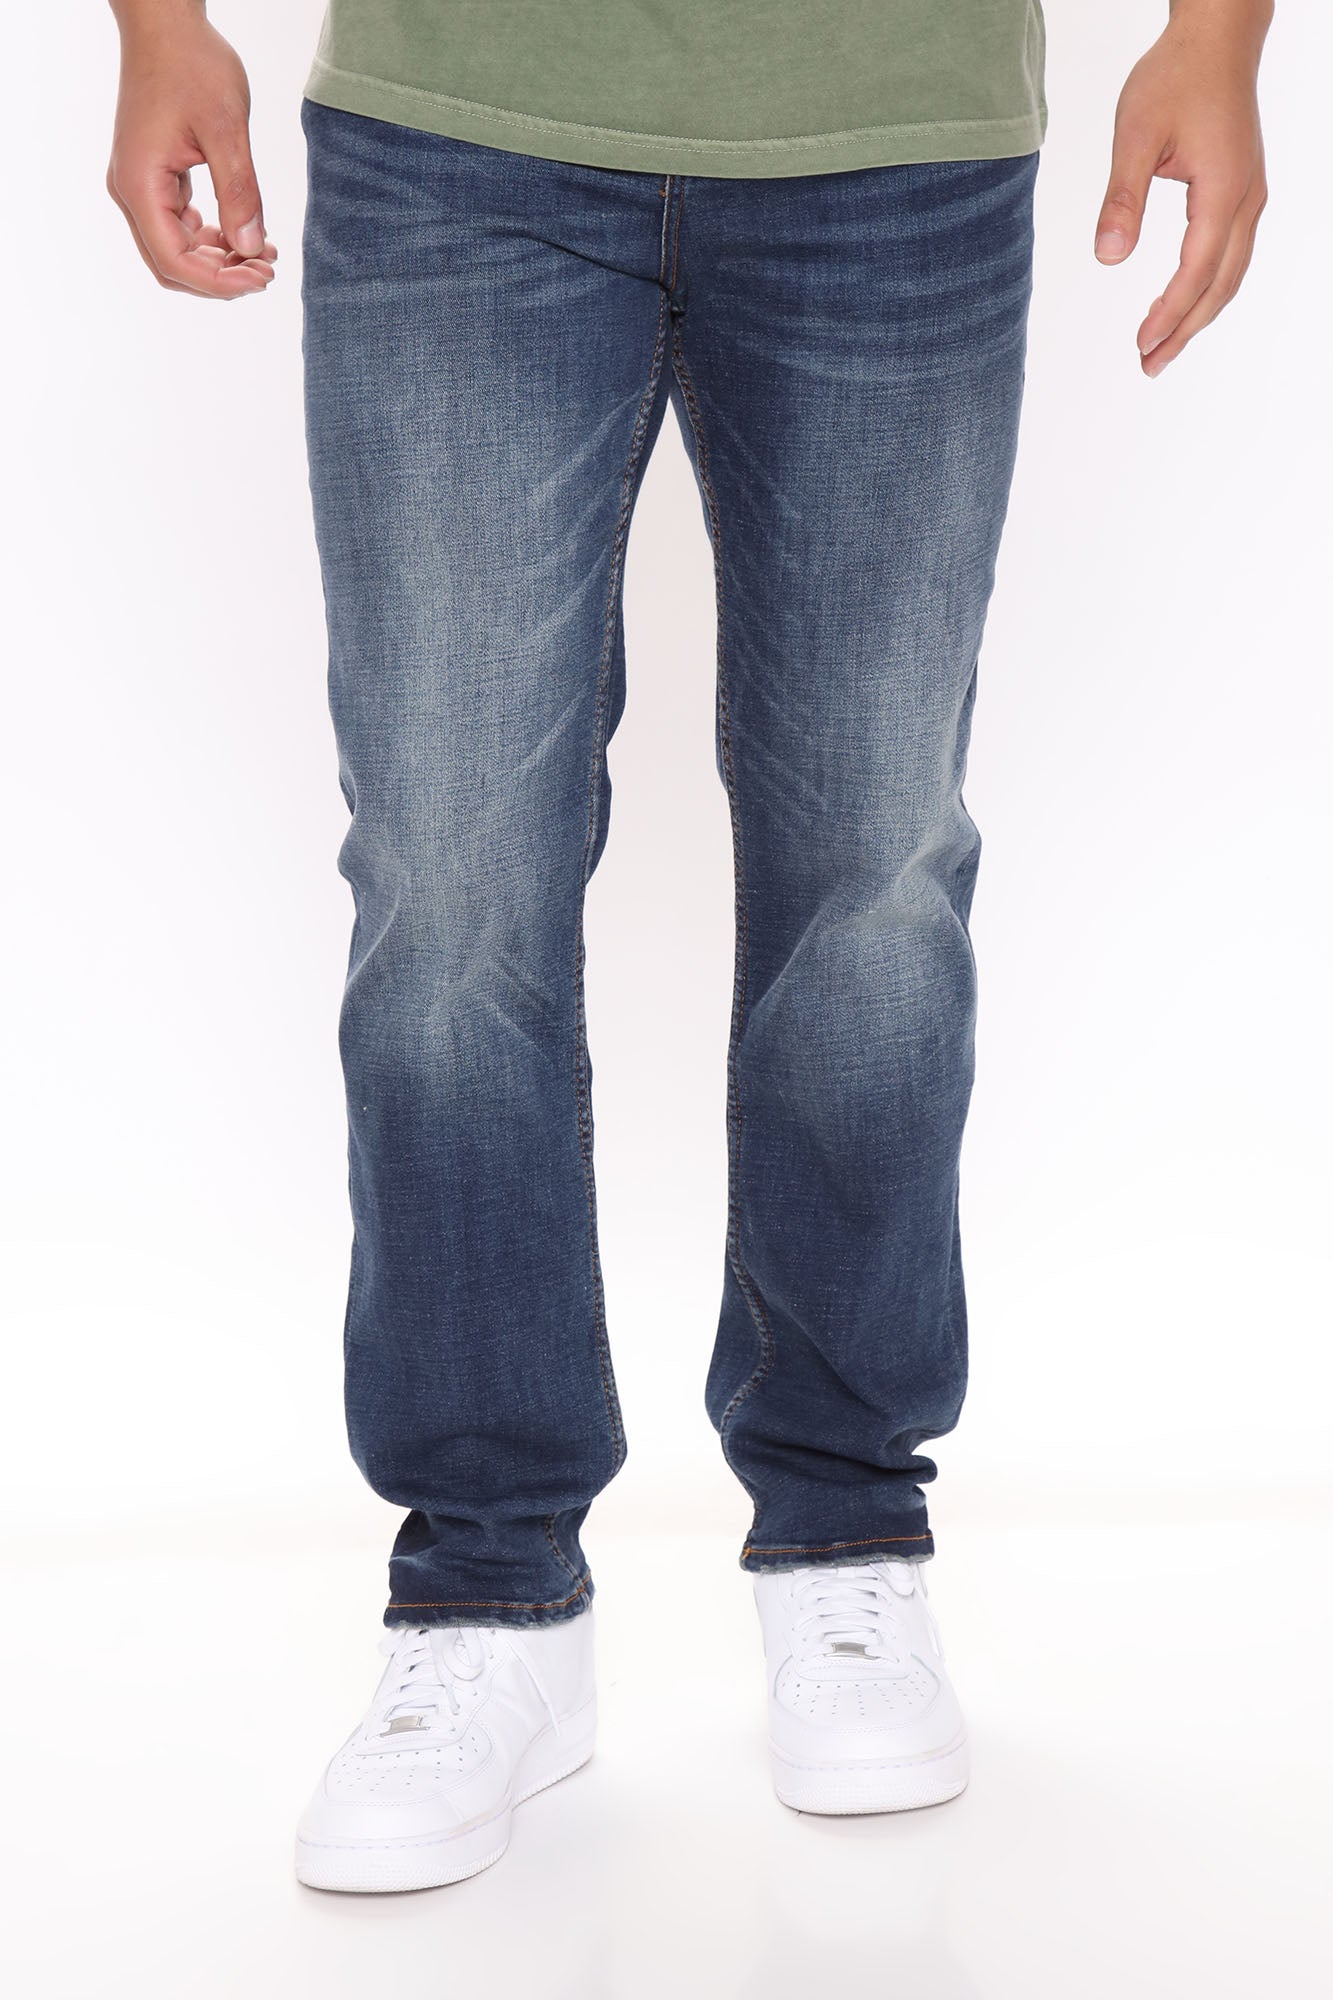 Finish Clean Jeans Nova Fashion - | Jeans Fashion Medium Wash Mens Straight | Nova,